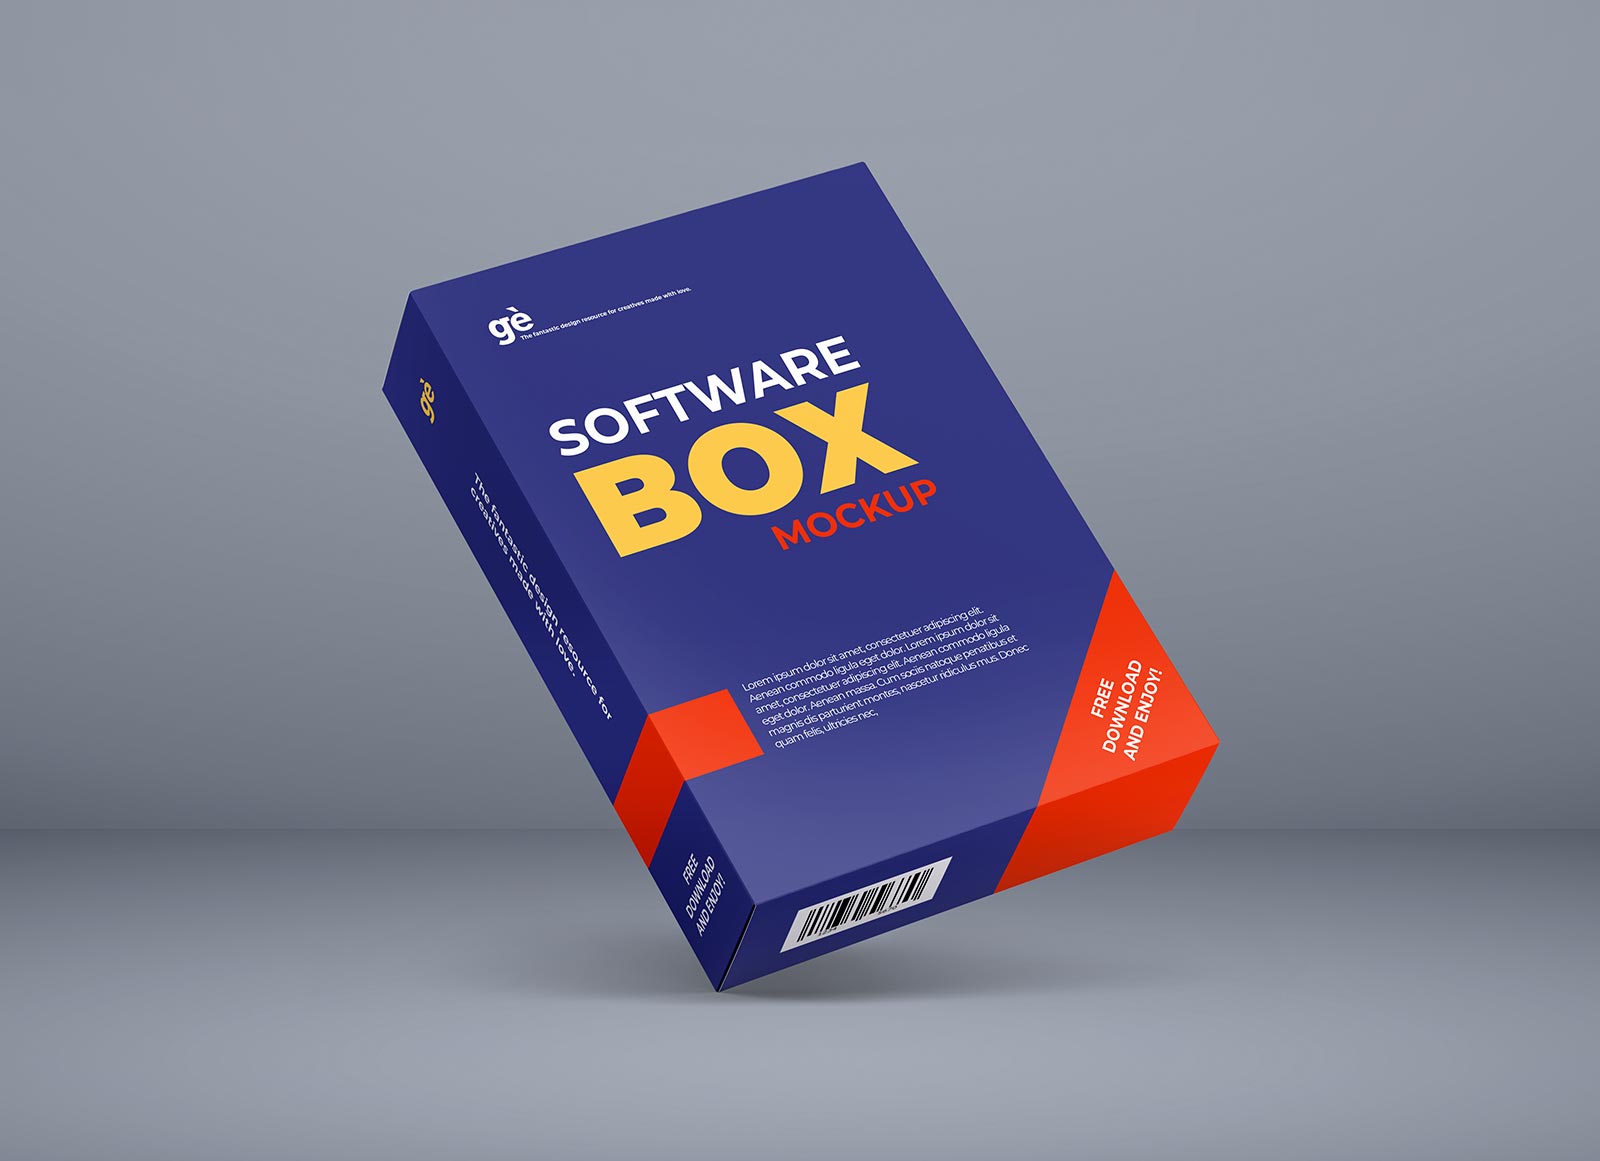 Maqueta de caja de software flotante